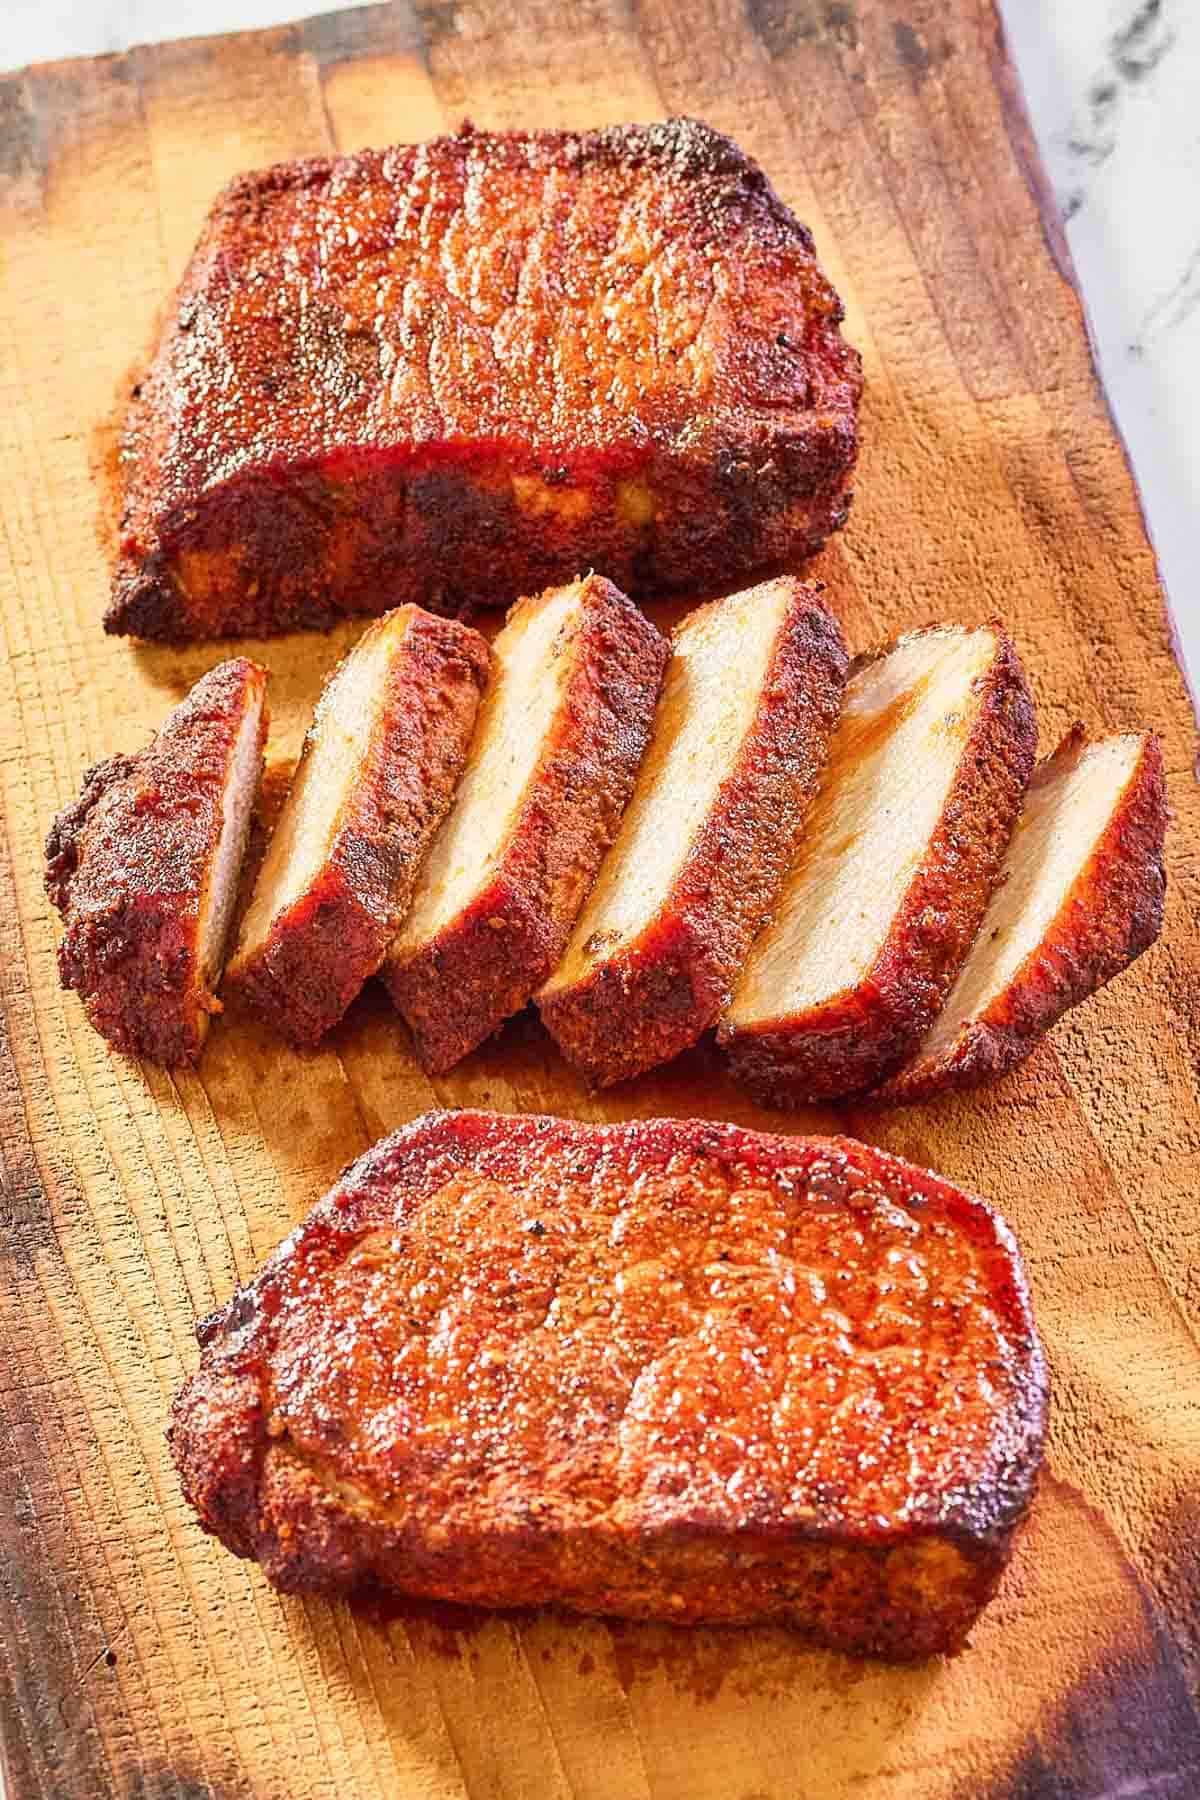 three smoked pork chops on a wood board.